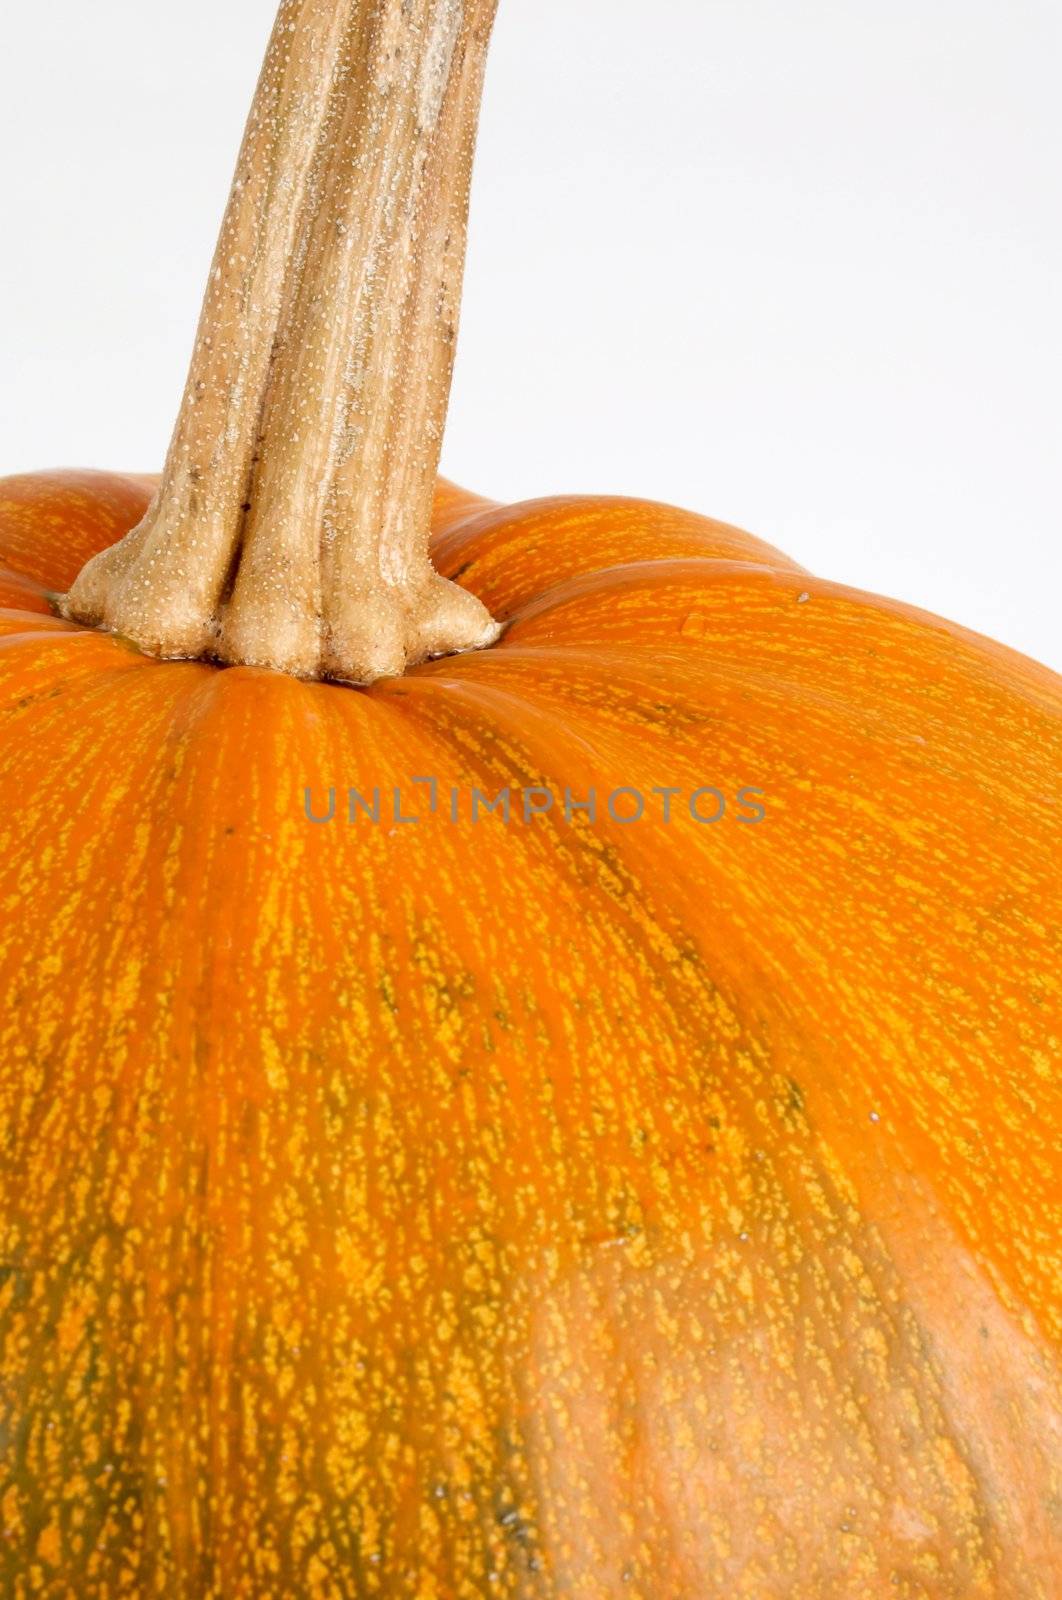 Part of pumpkin by velkol